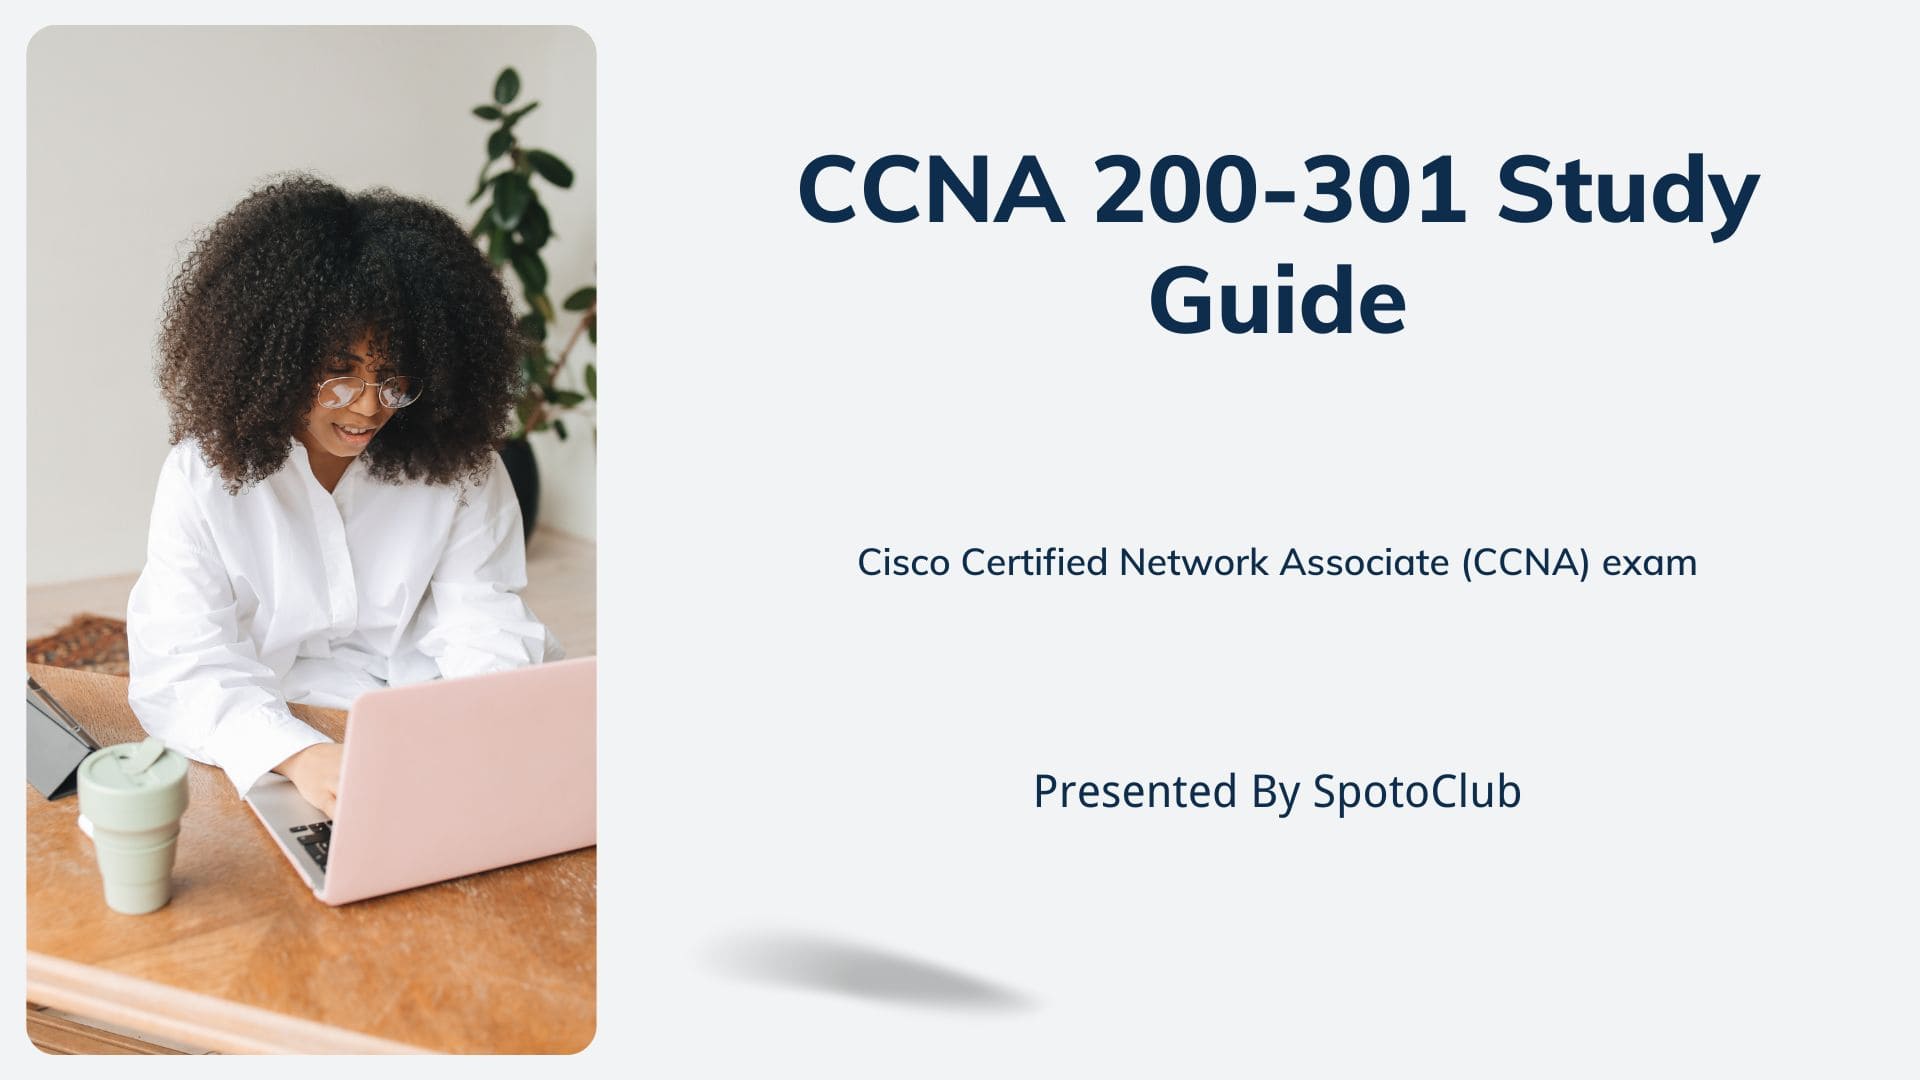 CCNA 200-301 Study Guide